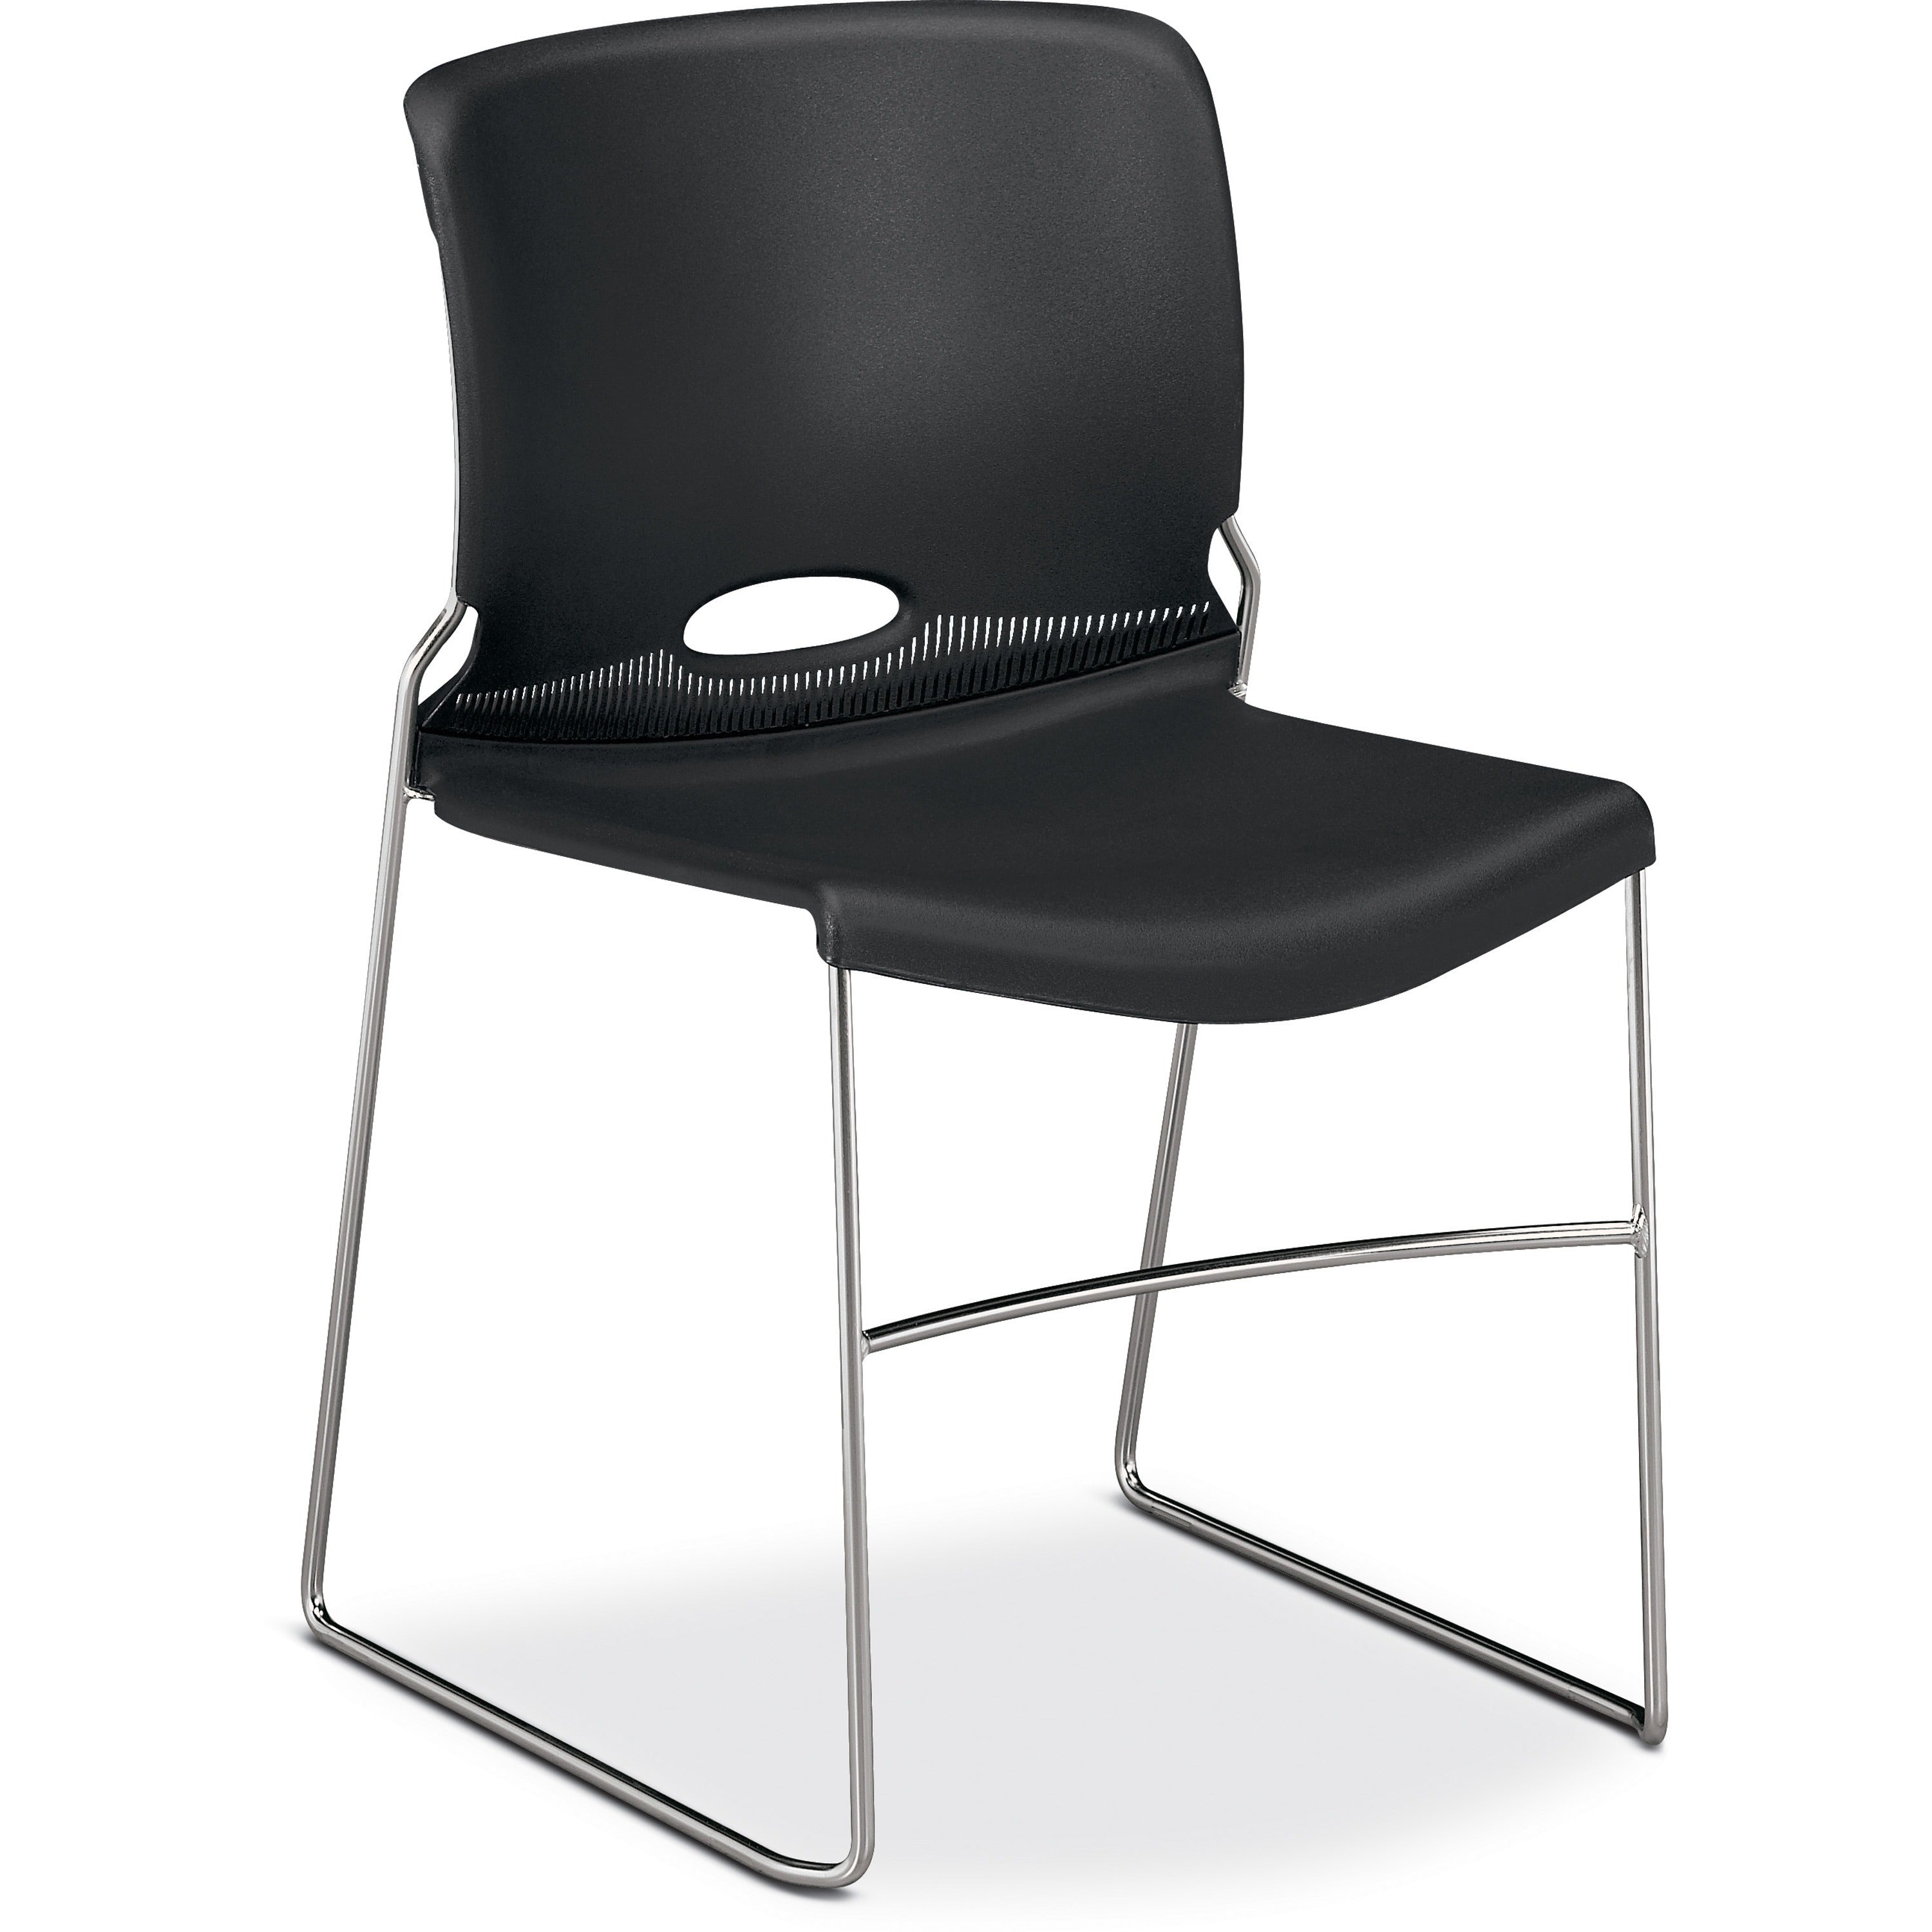 hon-4040-series-high-density-olson-stacker-chair-onyx-plastic-seat-onyx-plastic-back-chrome-steel-frame-4-carton_hon4041on - 1